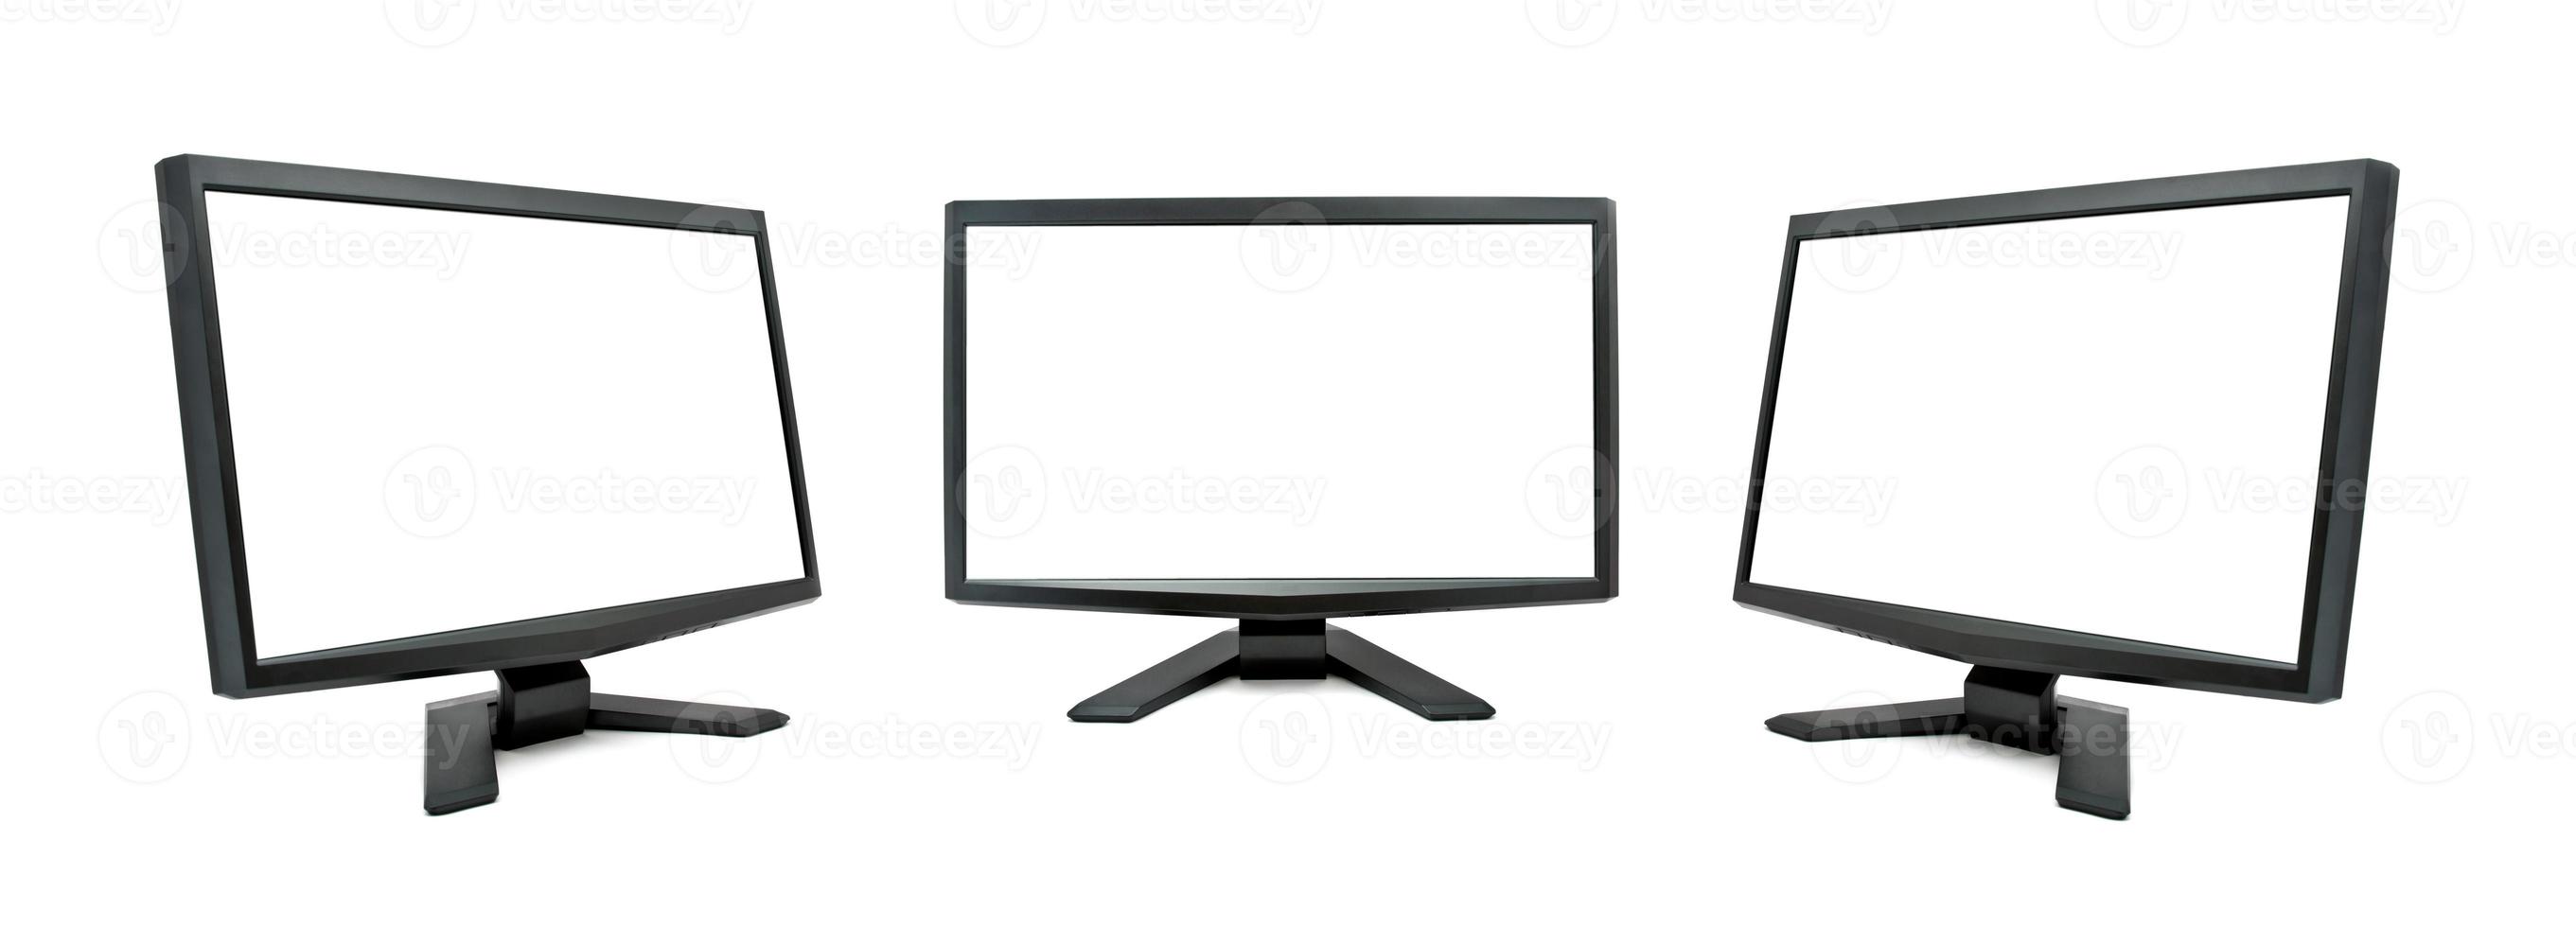 Monitors on white background photo